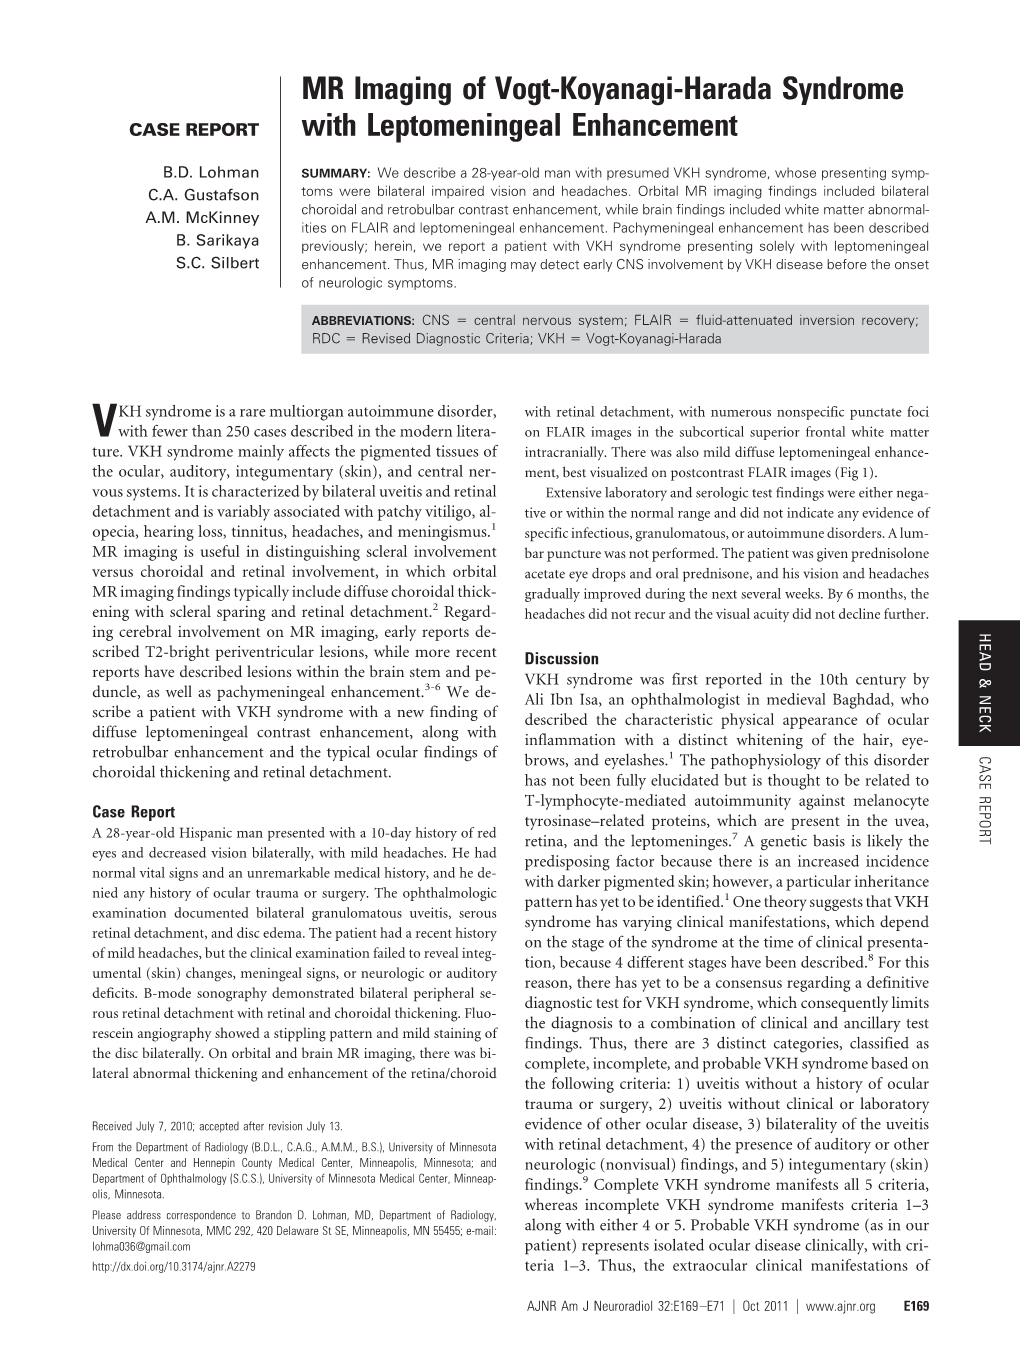 MR Imaging of Vogt-Koyanagi-Harada Syndrome CASE REPORT with Leptomeningeal Enhancement